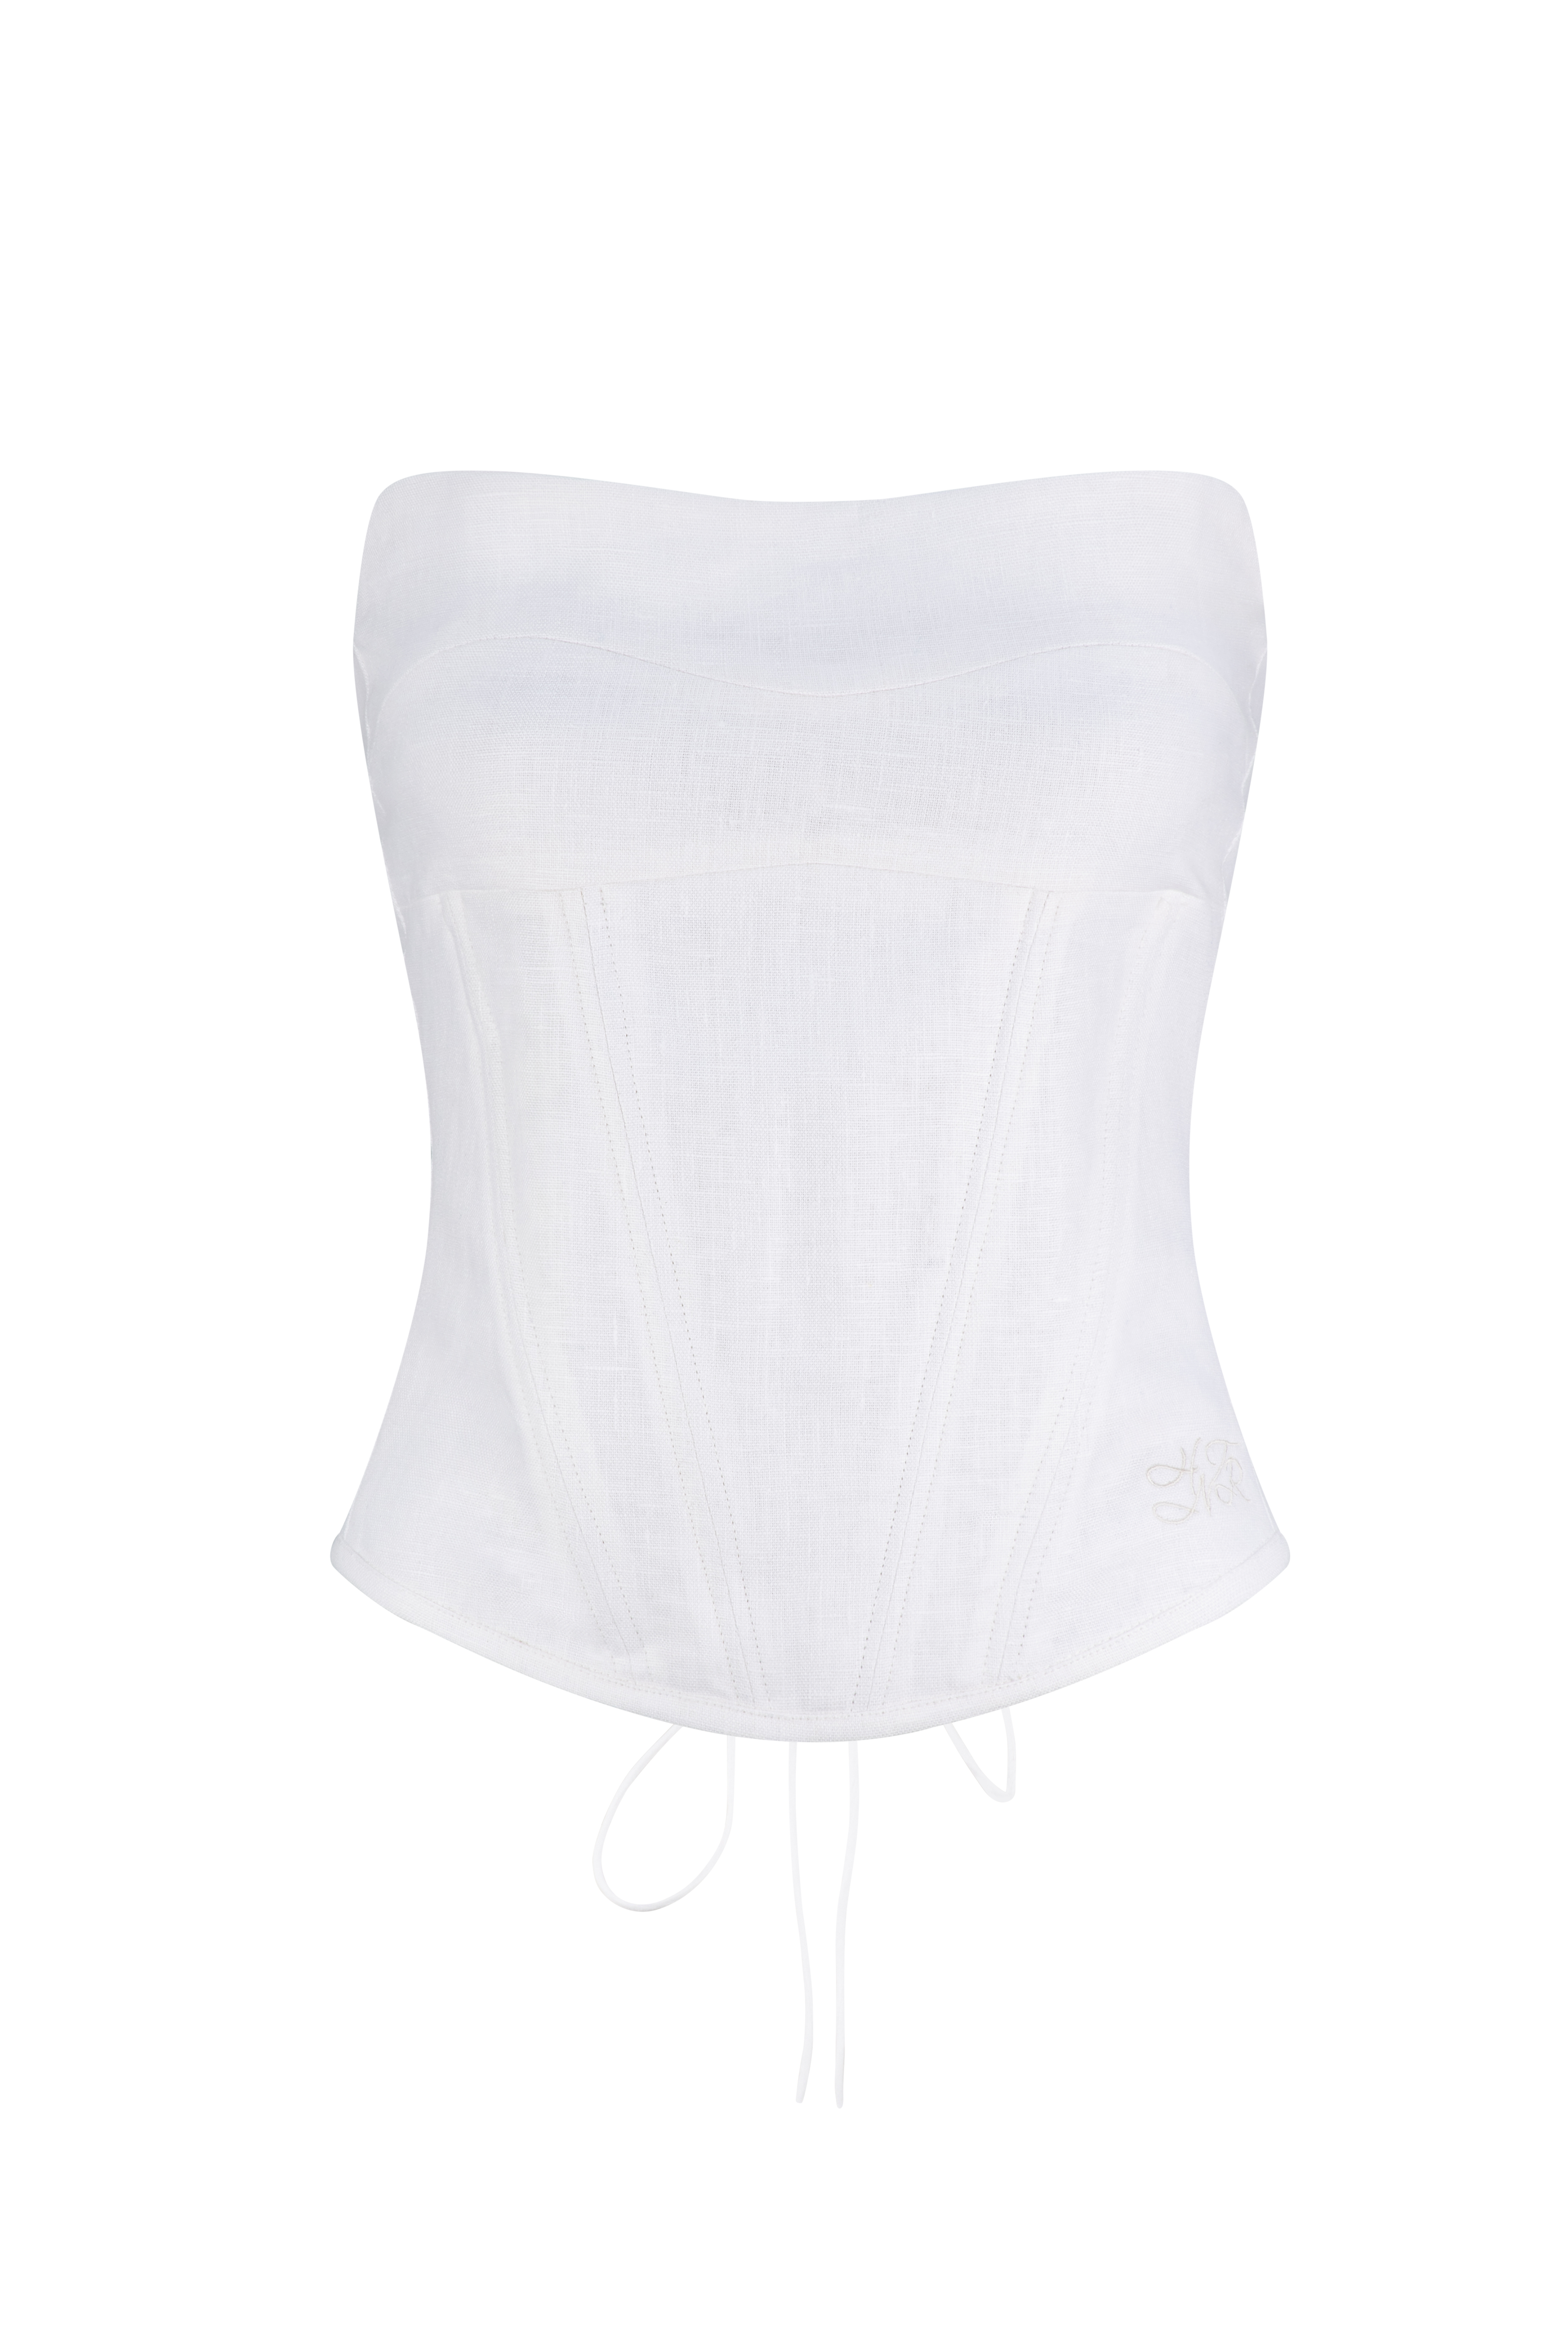 Luiza corset: Blanc